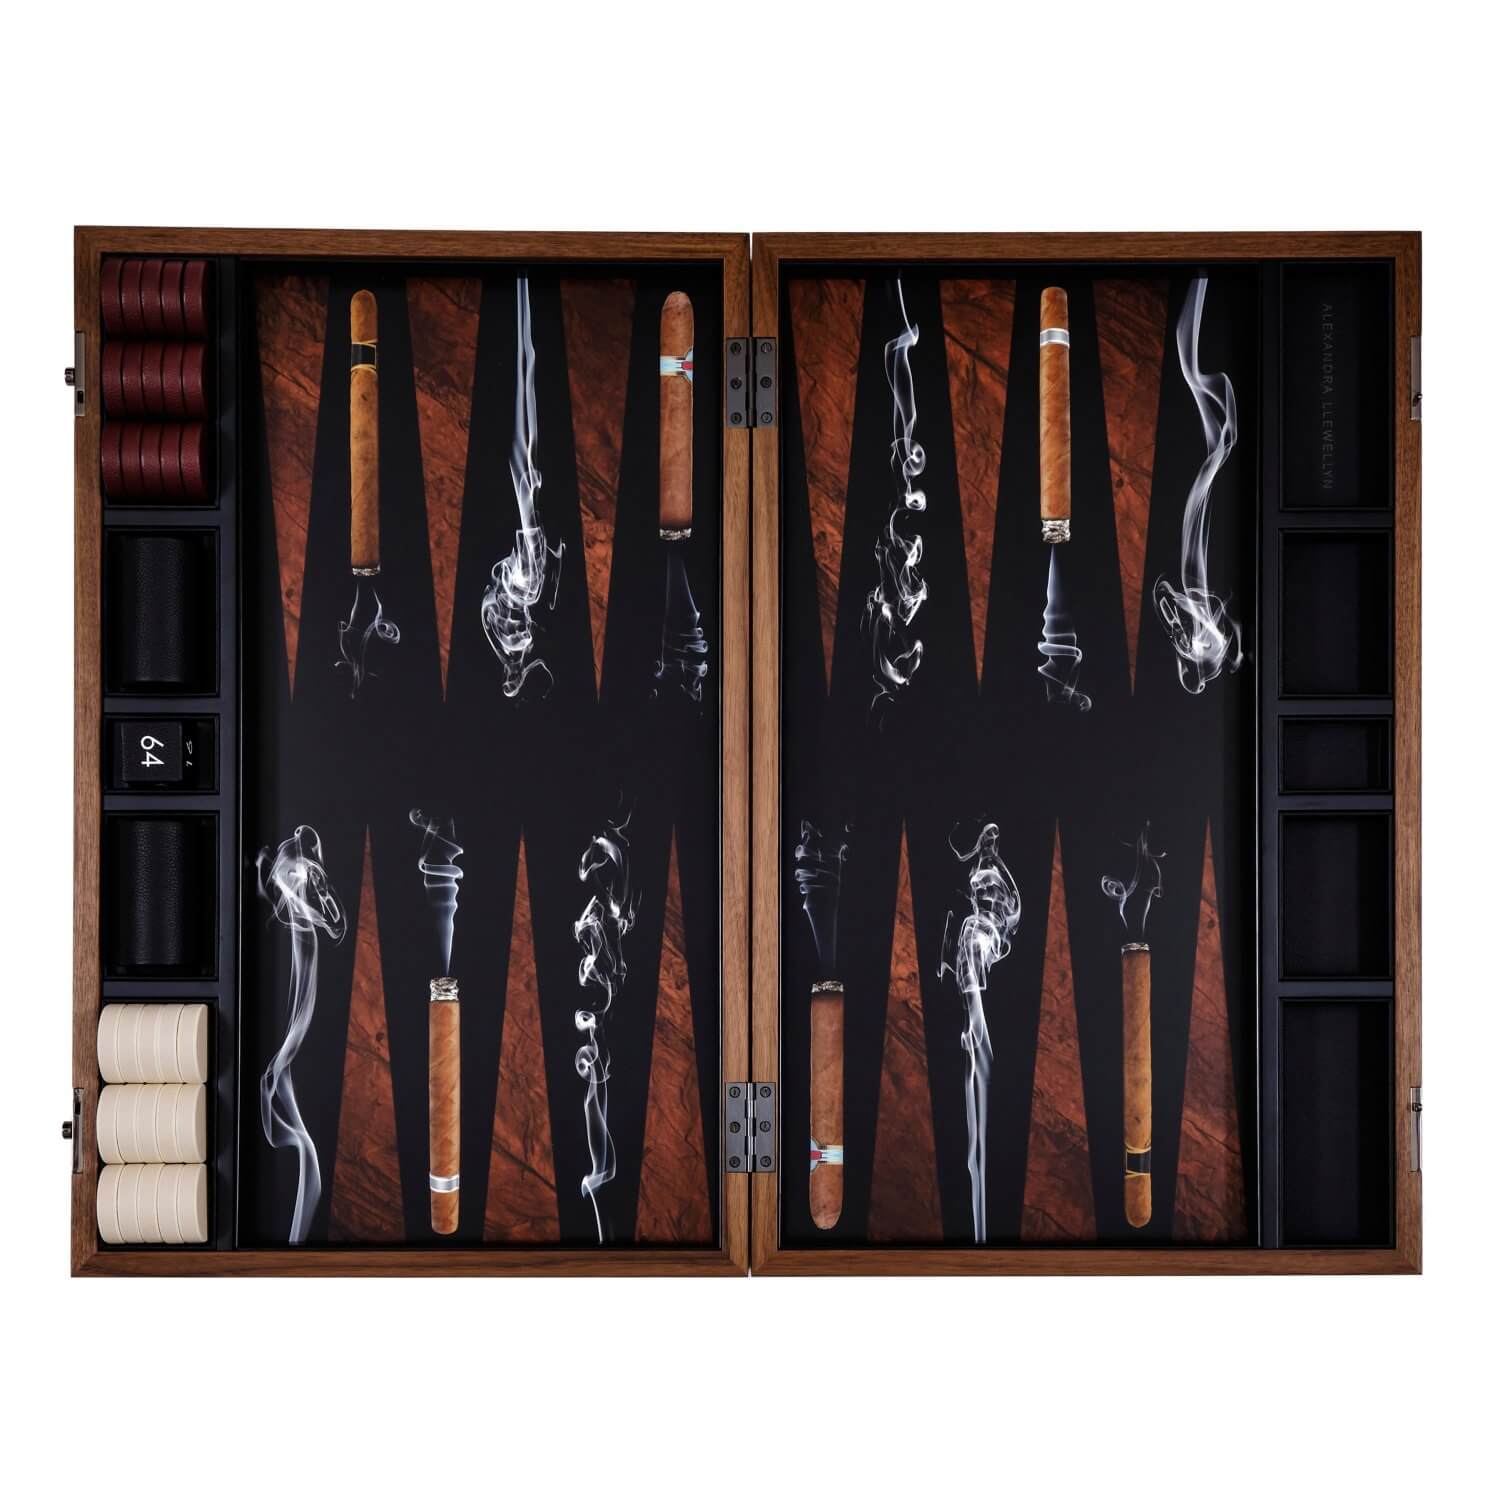 Alexandra Llewellyn Cigar Backgammon Set Open